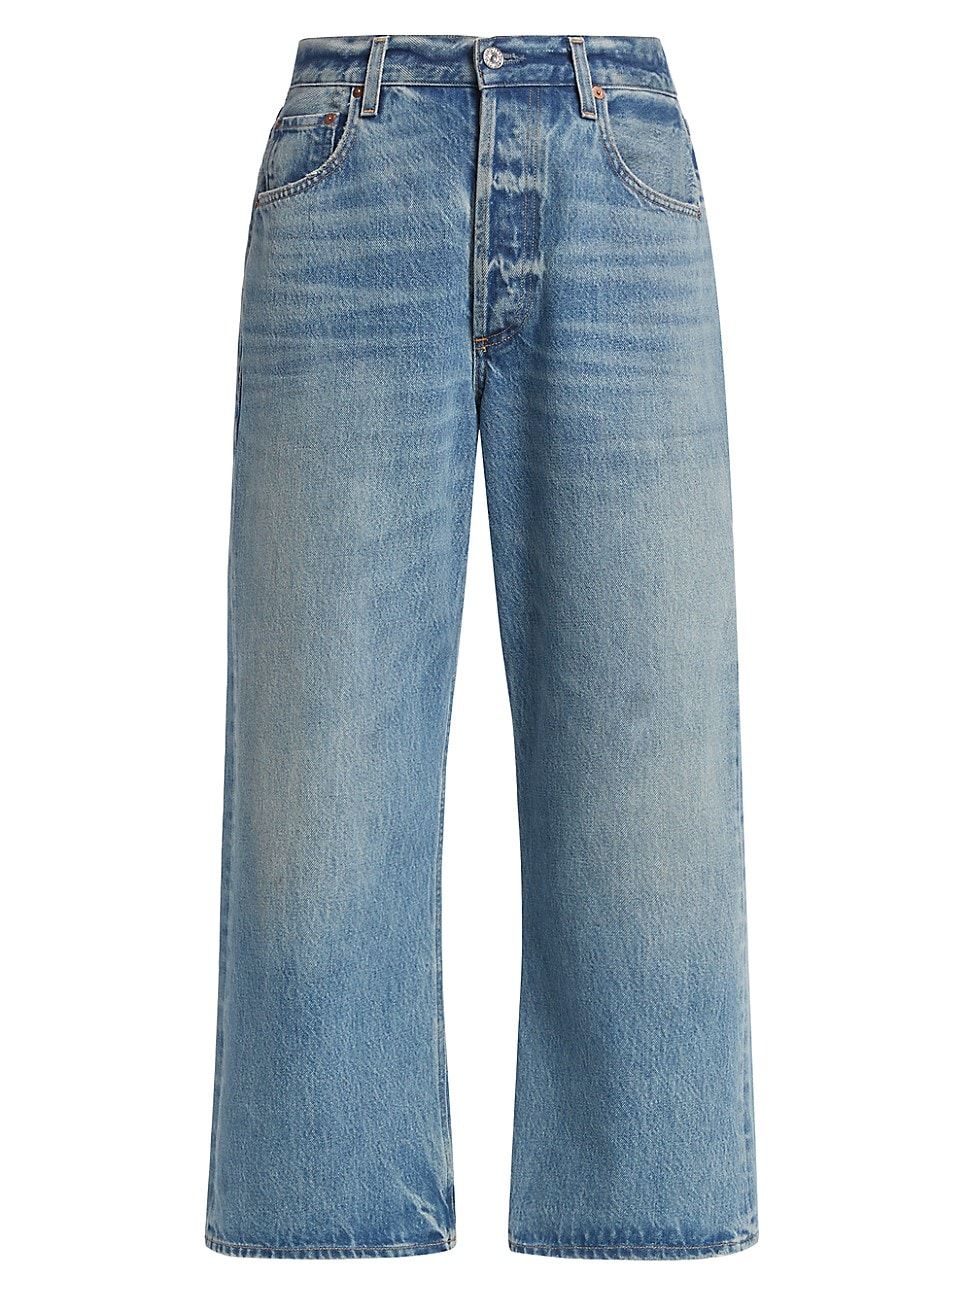 Women's Gaucho Vintage Wide-Leg Jeans - Sodapop Medium Indigo - Size 27 | Saks Fifth Avenue